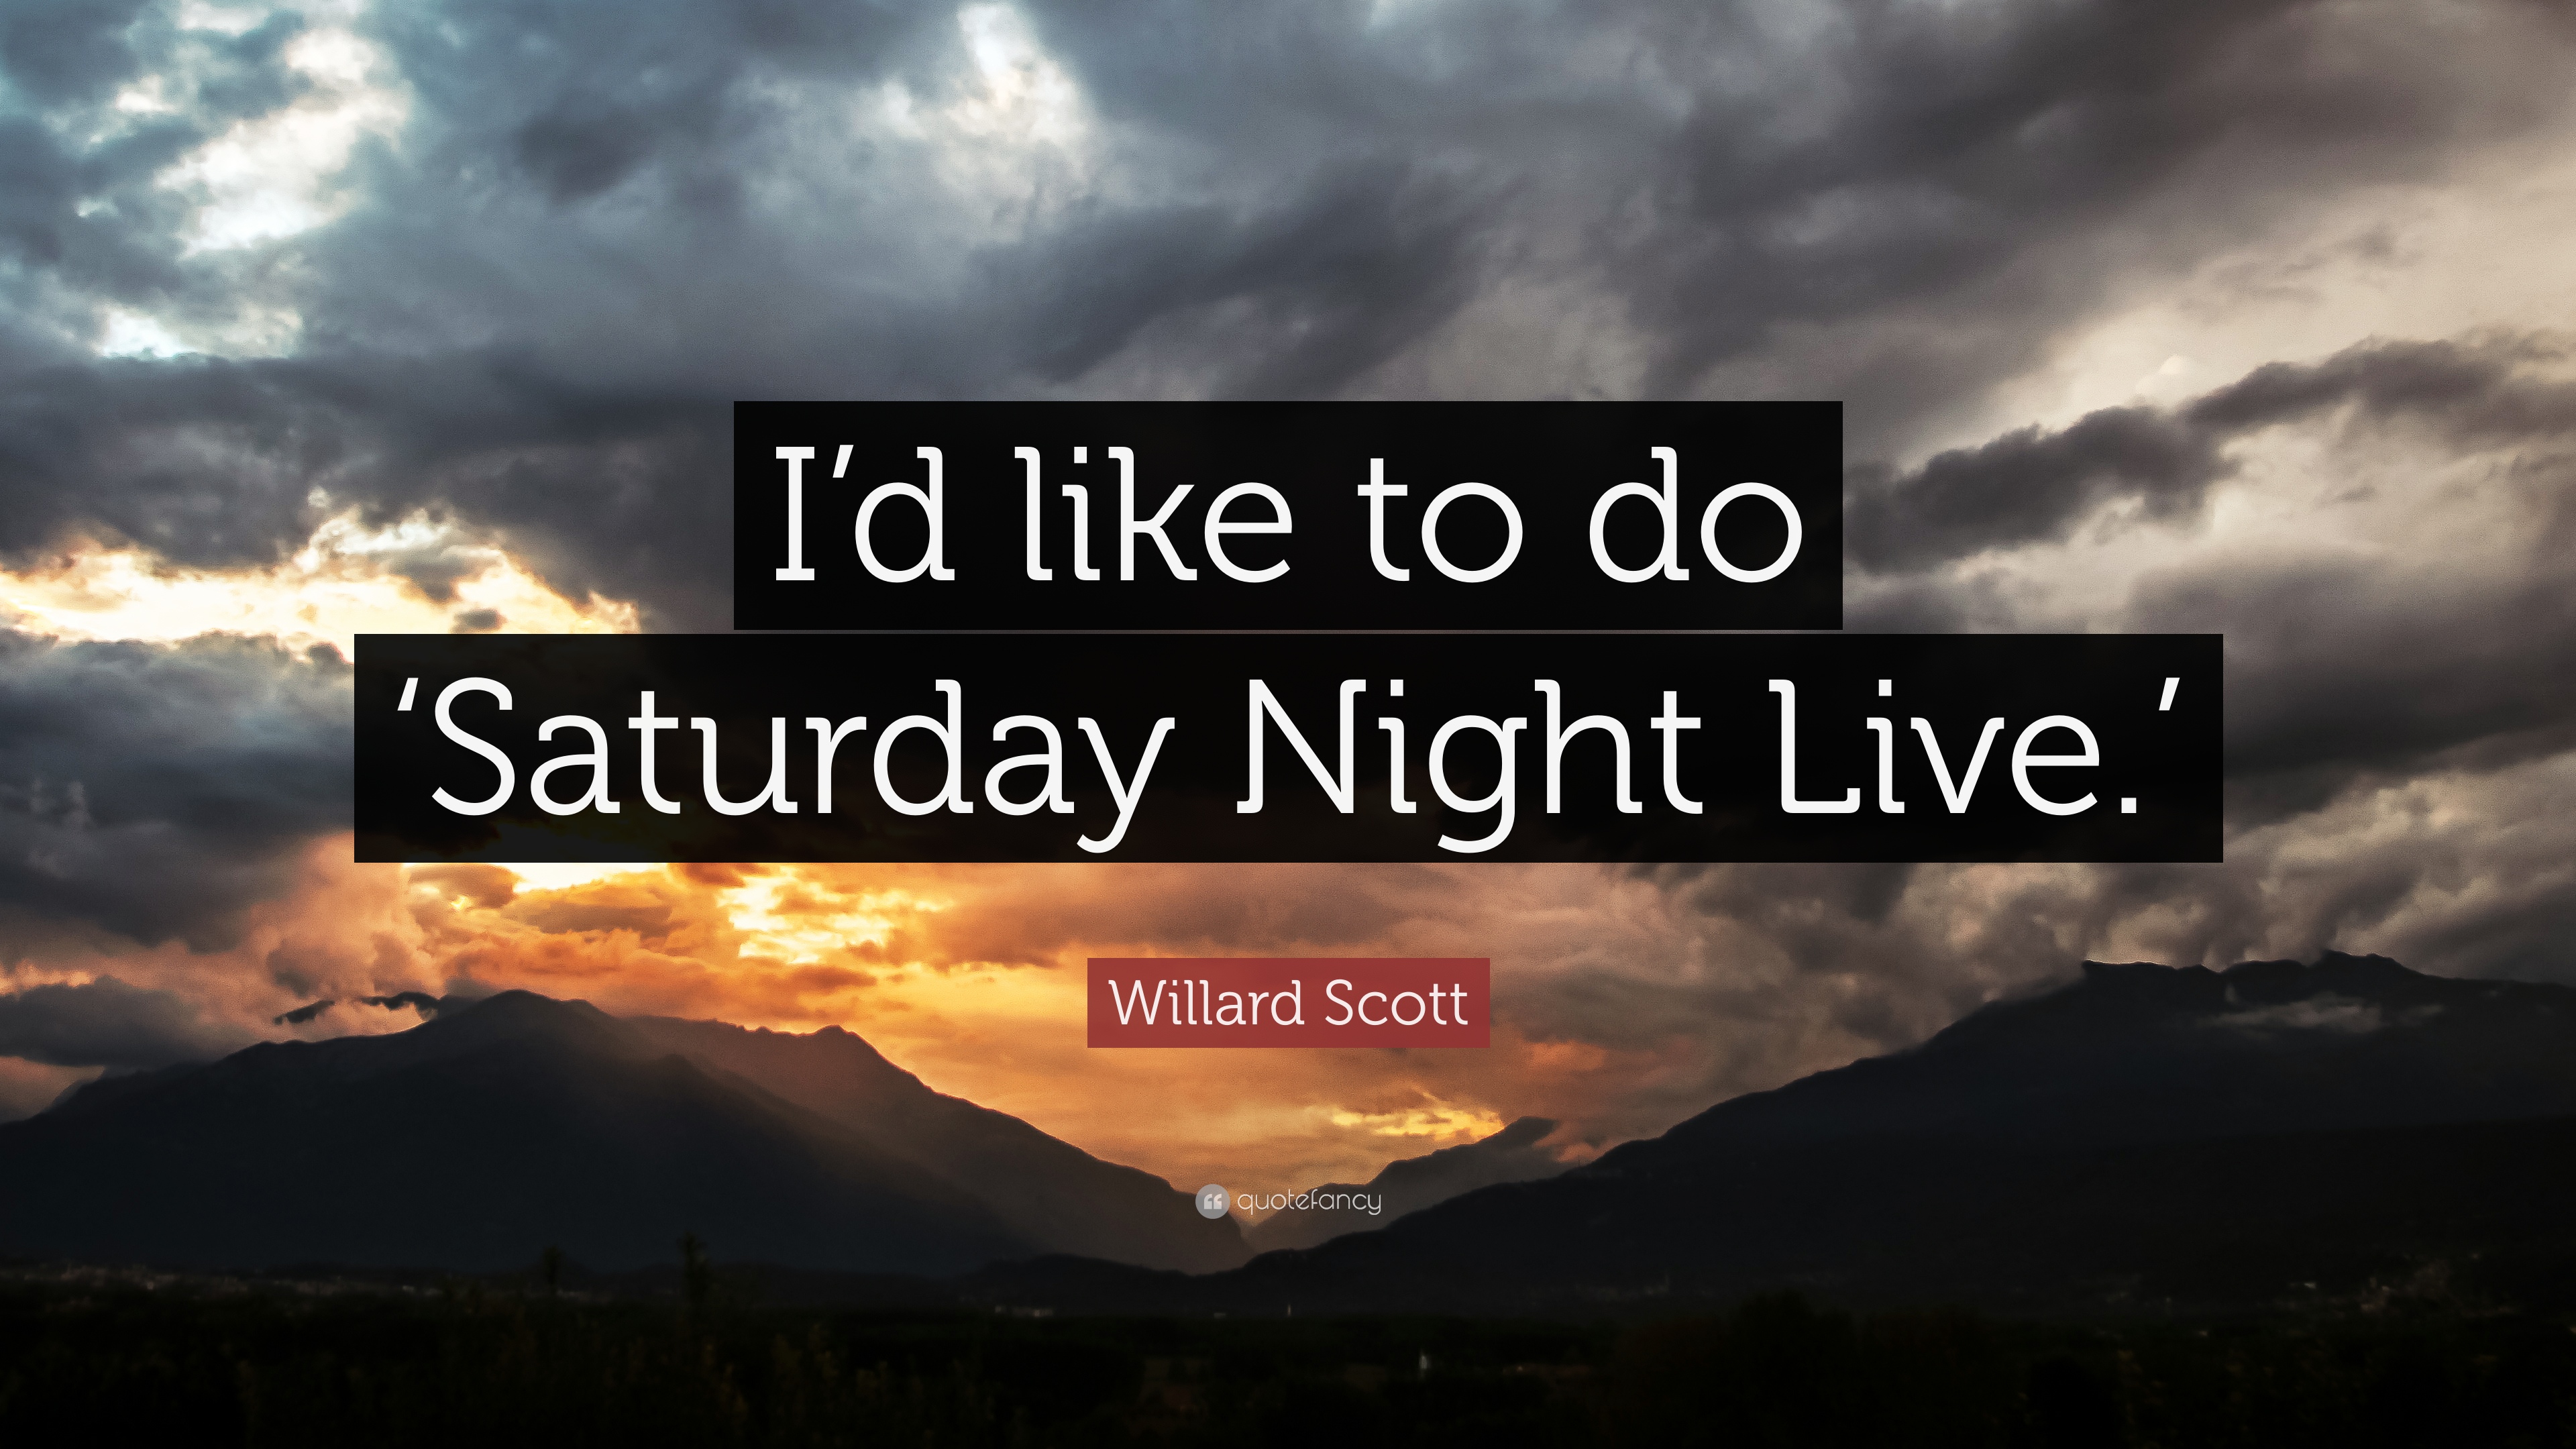 Willard Scott Quote: “I'd like to do 'Saturday Night Live.'” 7